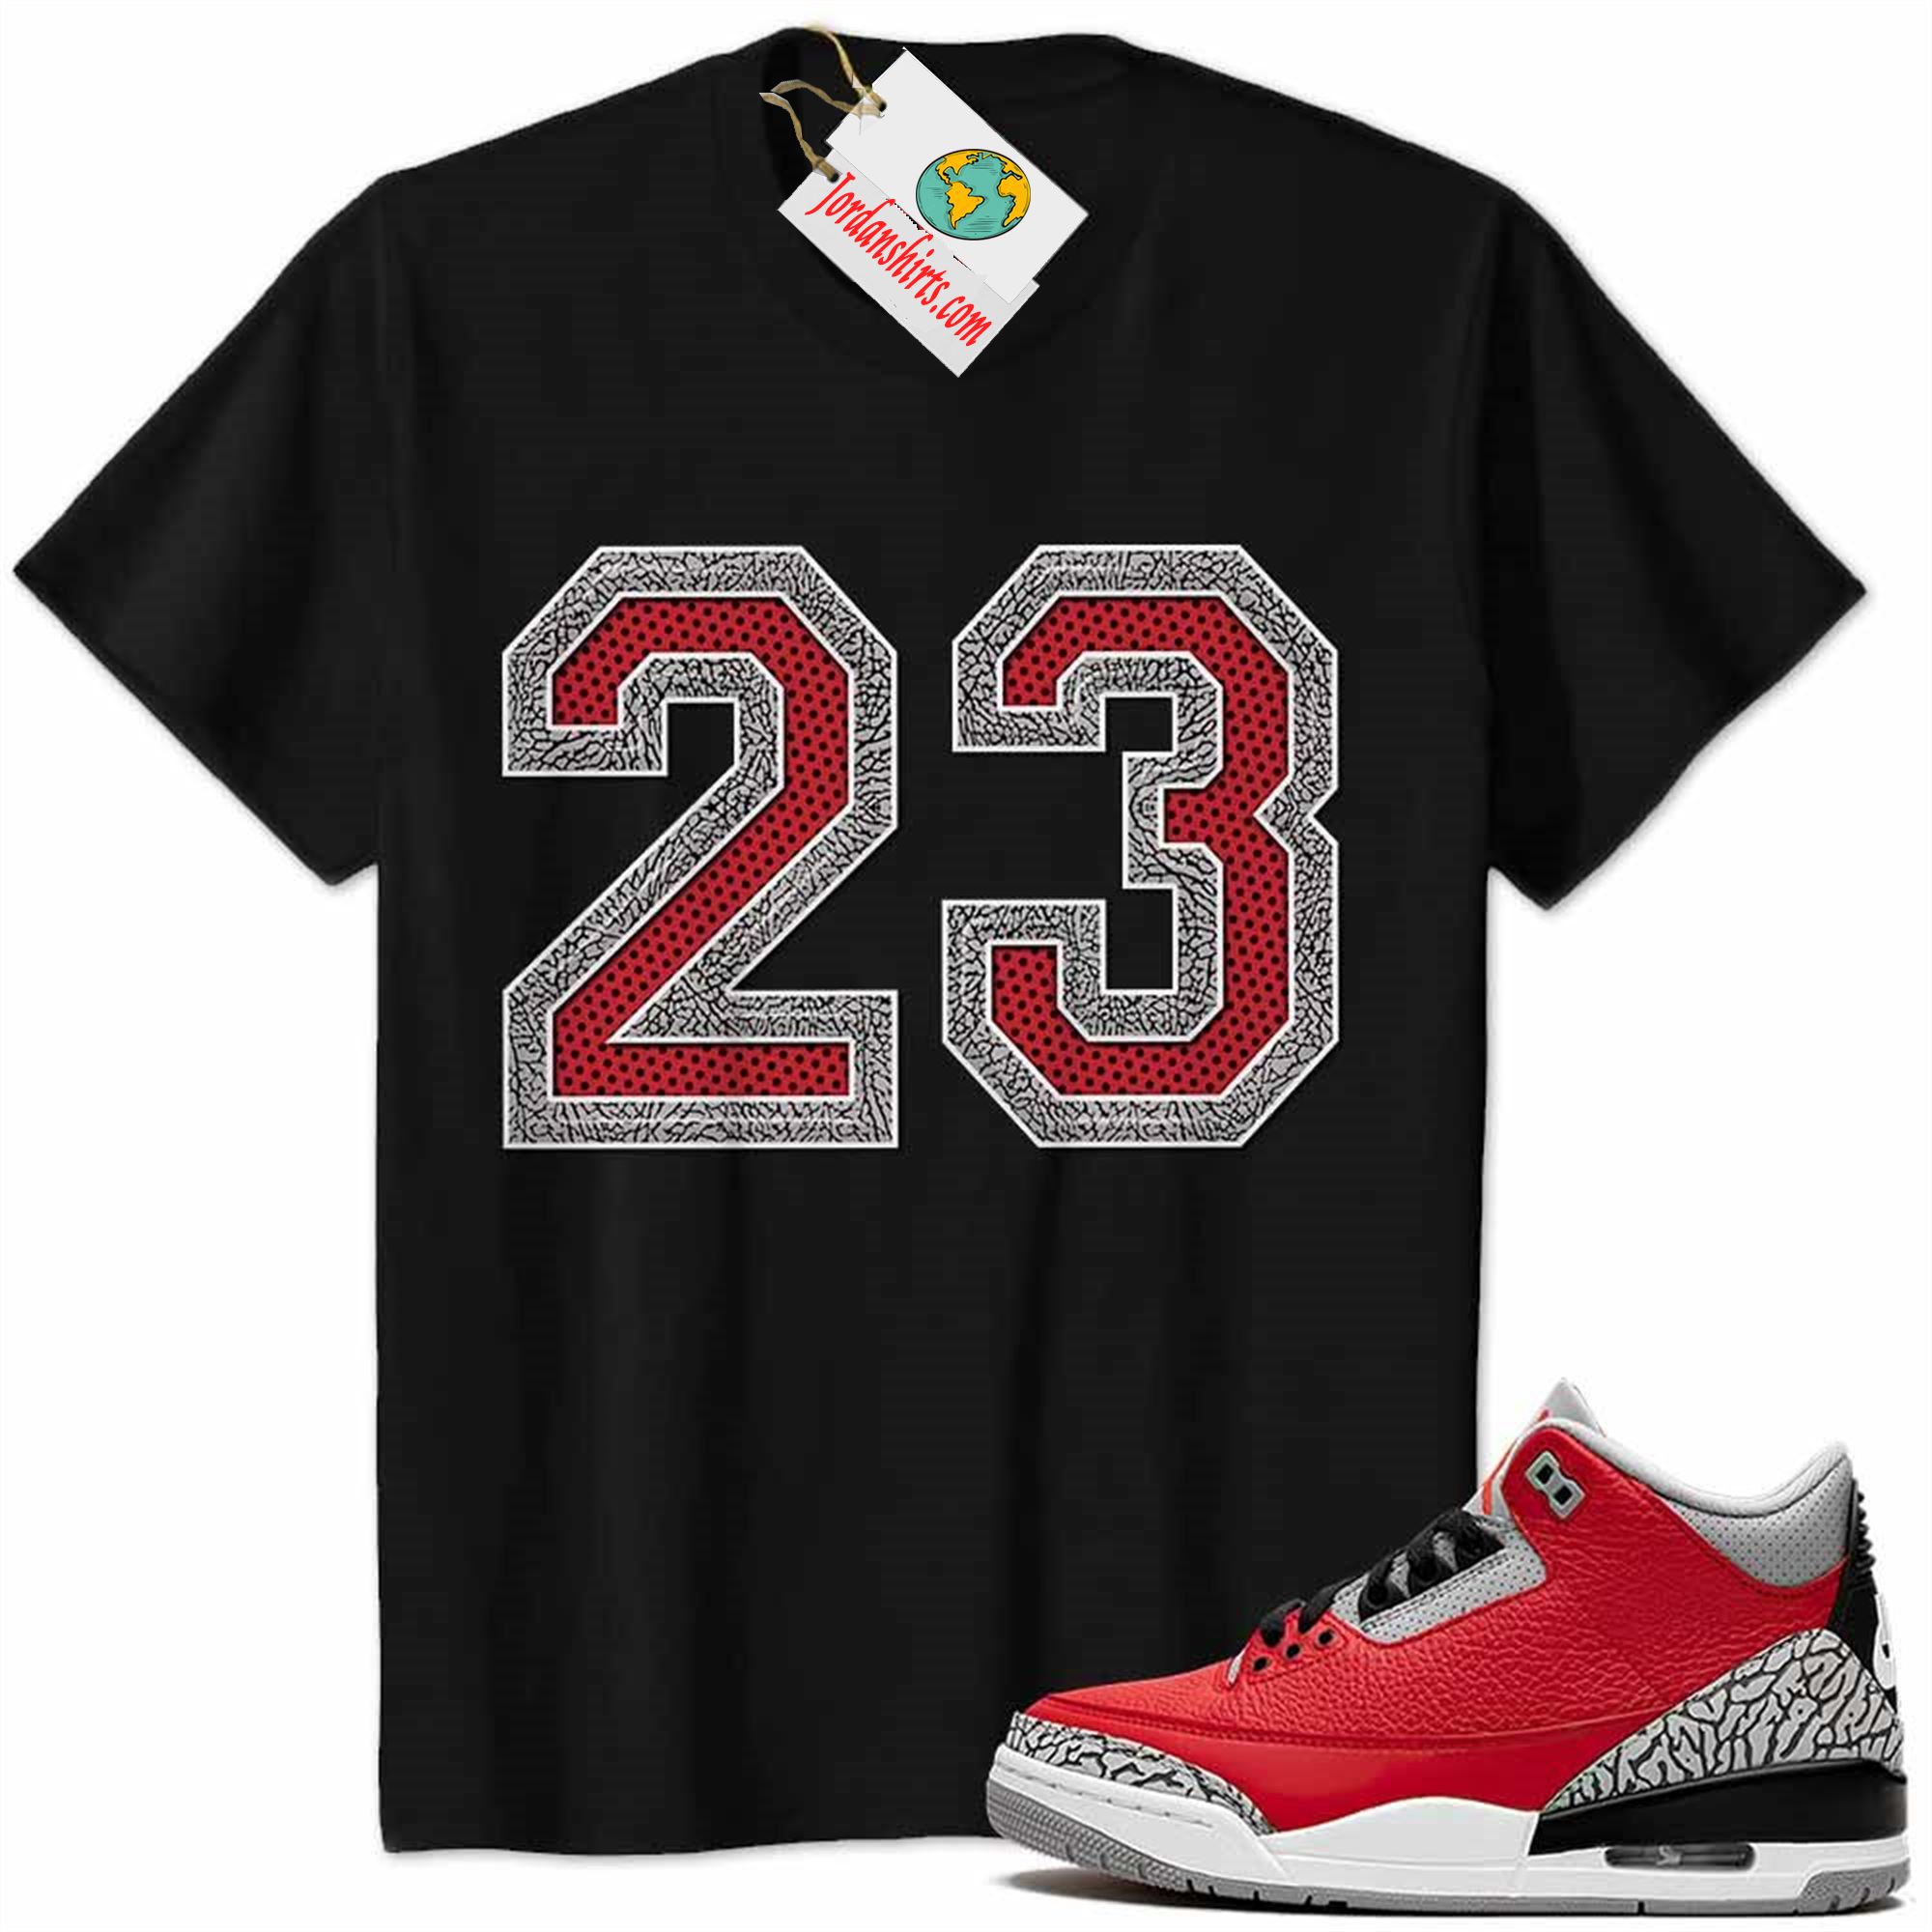 Jordan 3 Shirt, Jordan 3 Cement Shirt Michael Jordan Number 23 Black Full Size Up To 5xl